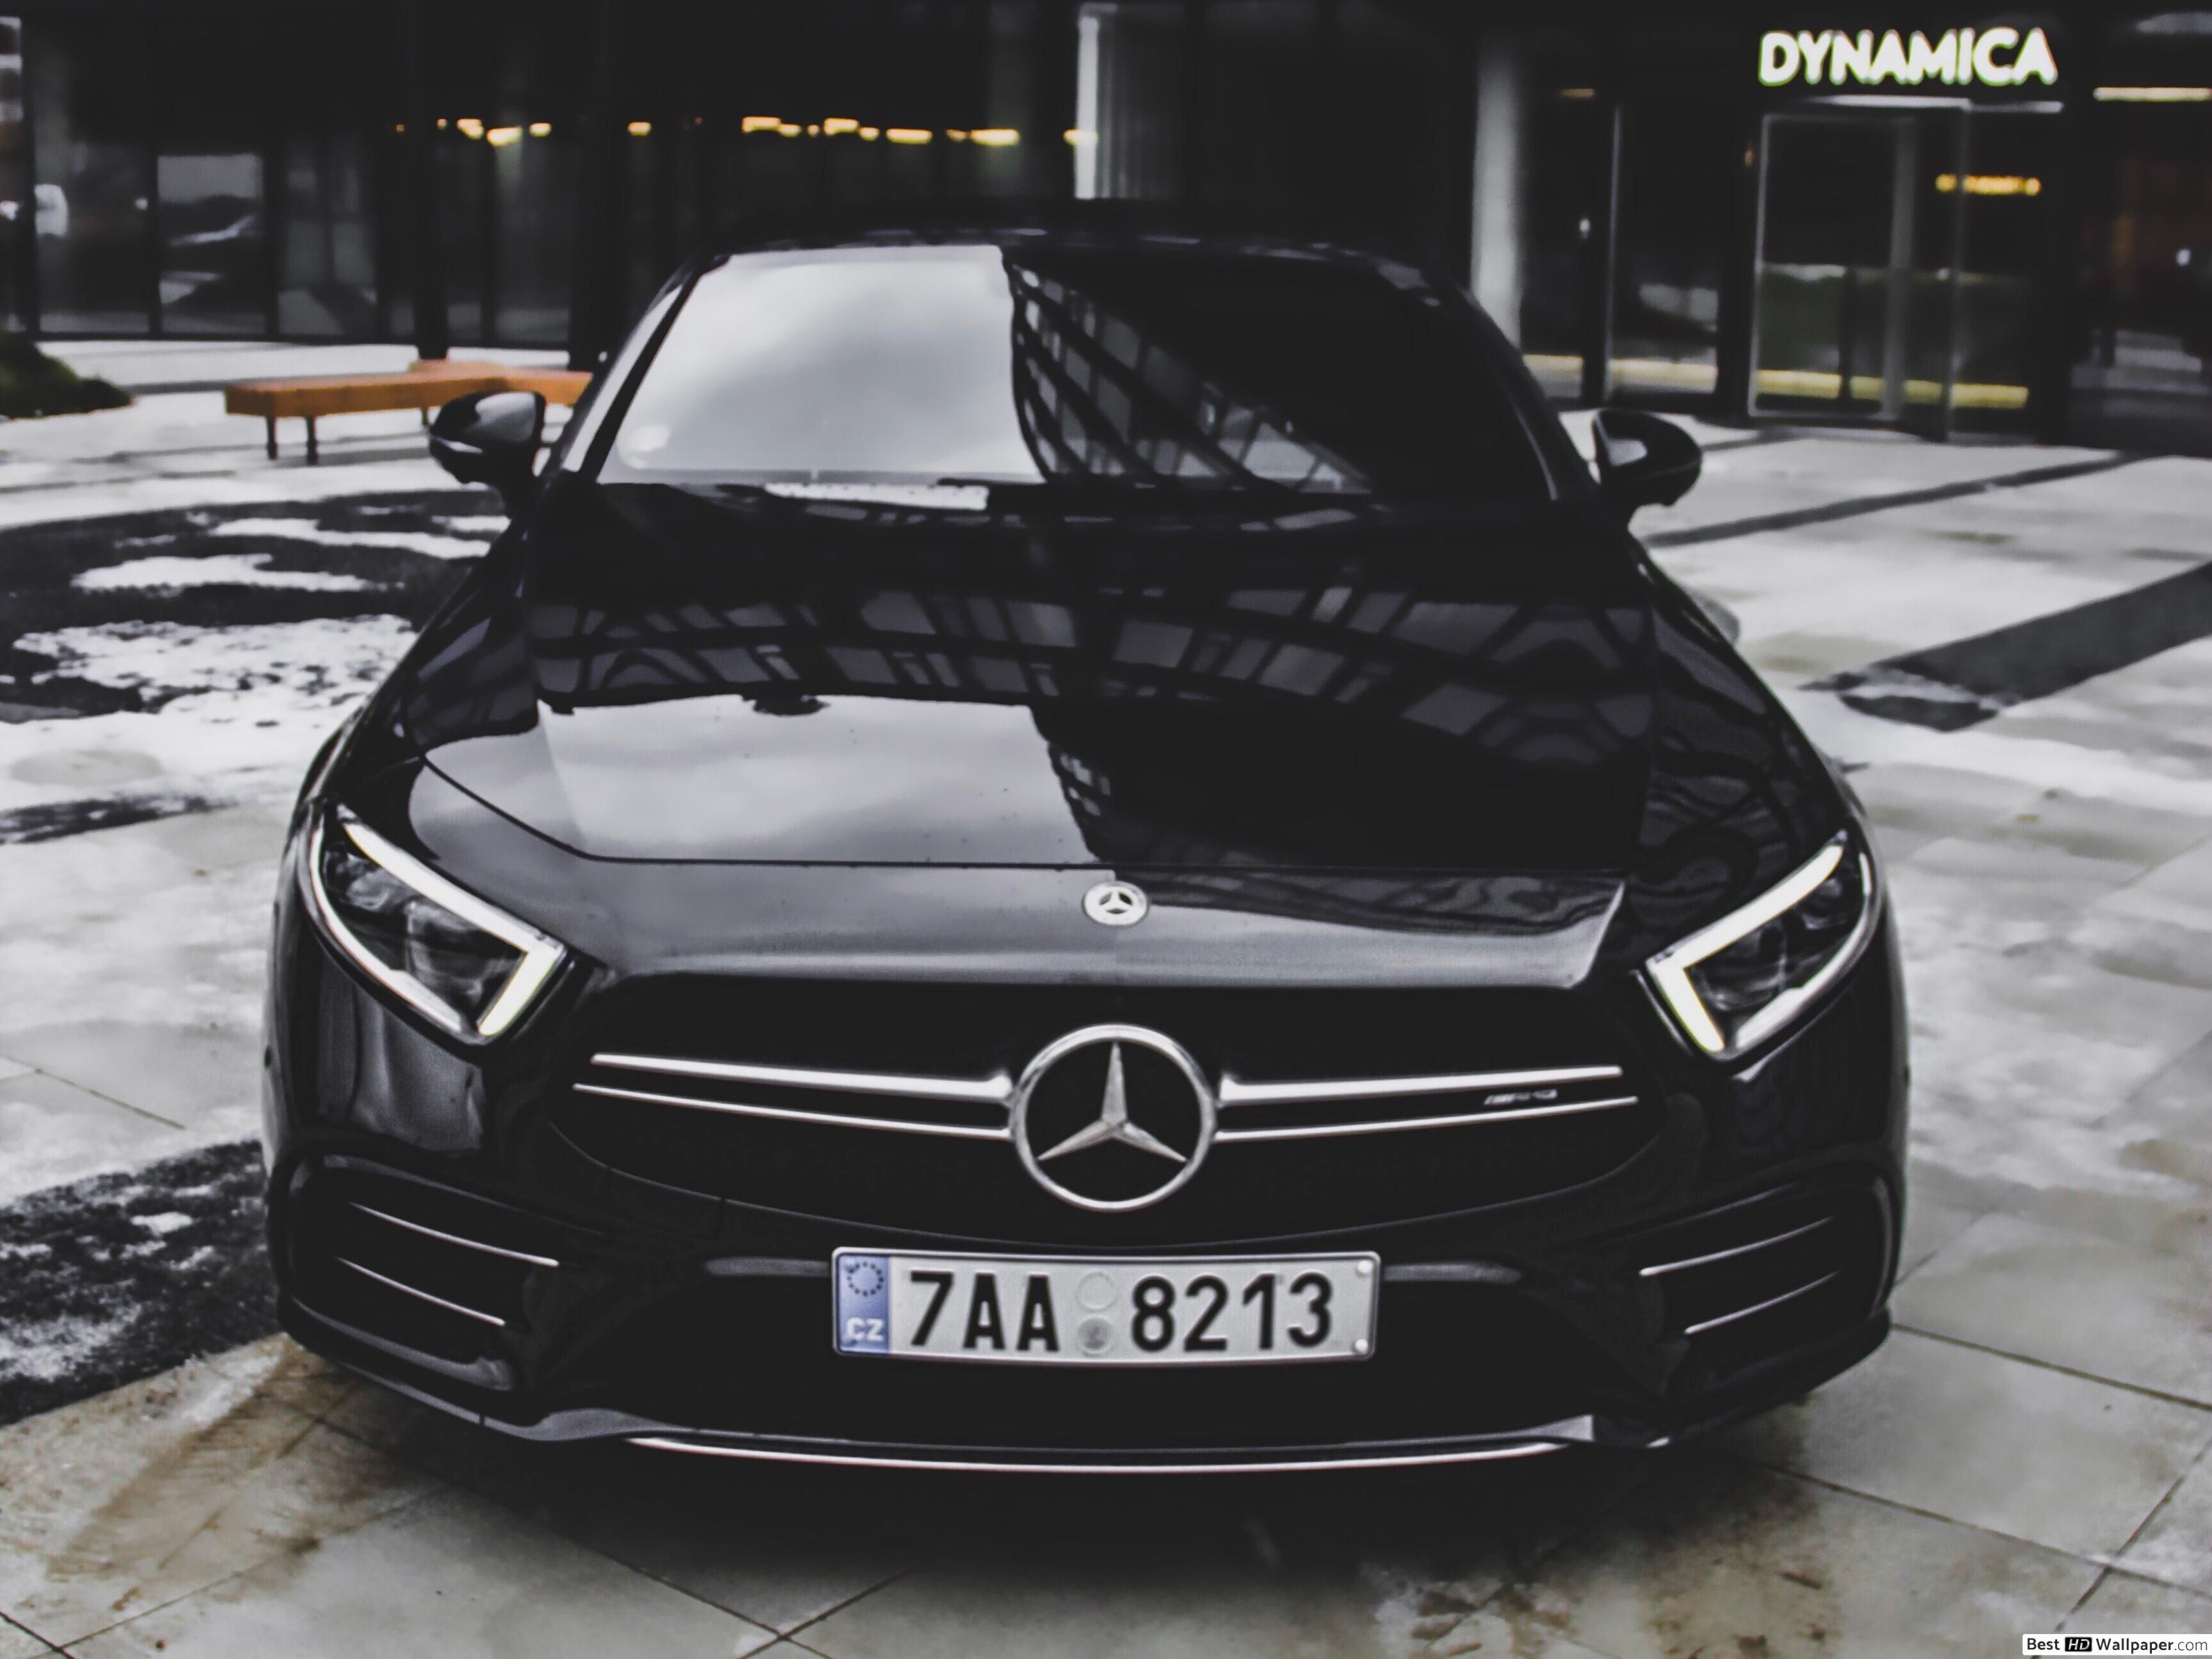 Black Mercedes Benz Car Parked Outside Dynamics Building HD Wallpaper Download